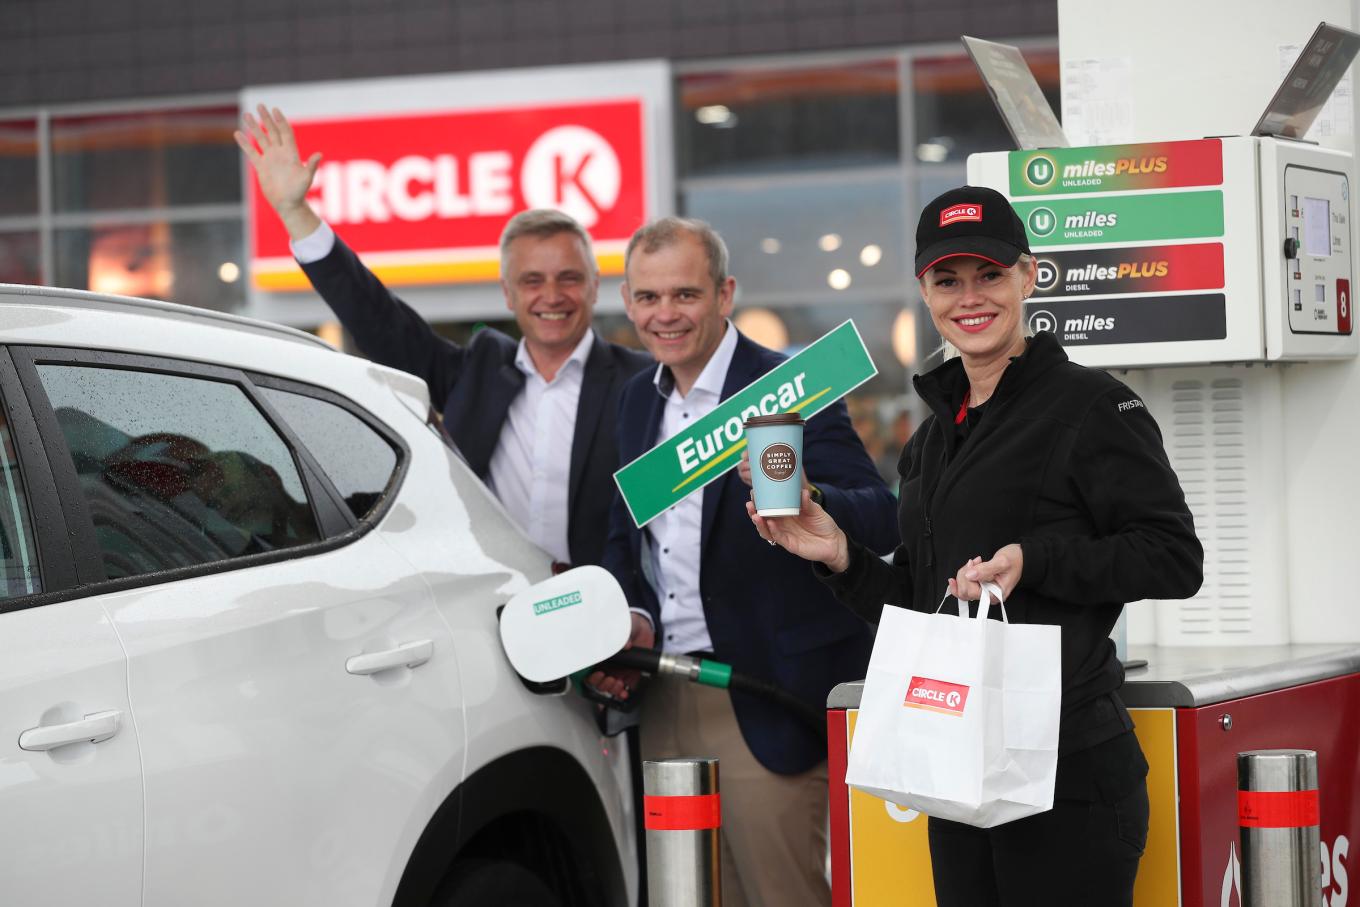 Europcar and Circle K partnership